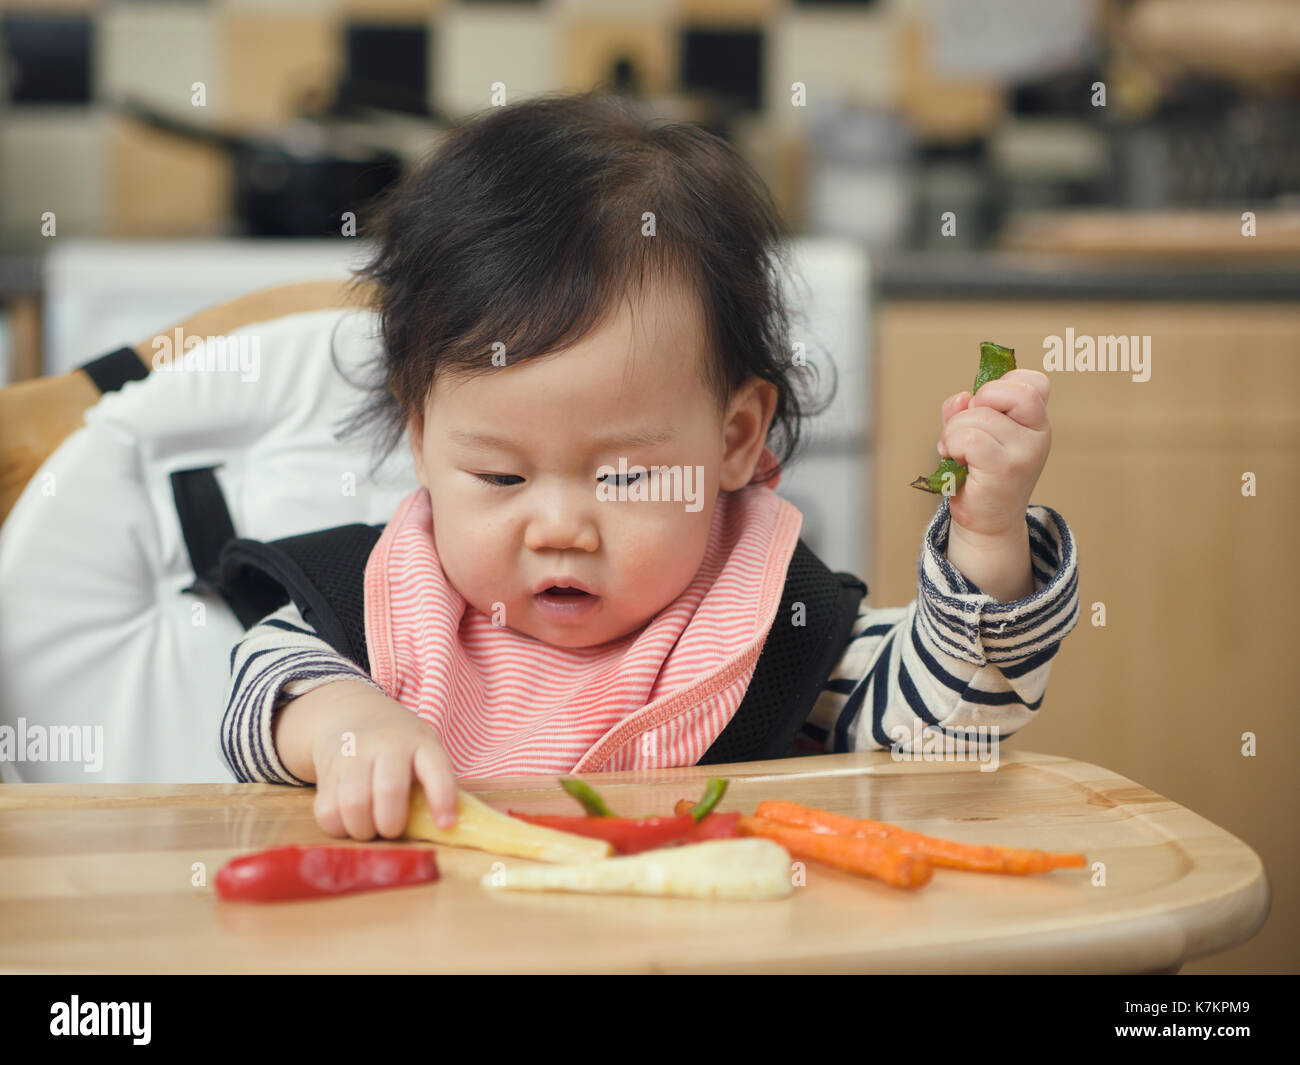 https://c8.alamy.com/comp/K7KPM9/asian-baby-girl-eating-roasted-vegetable-at-home-kitchen-K7KPM9.jpg